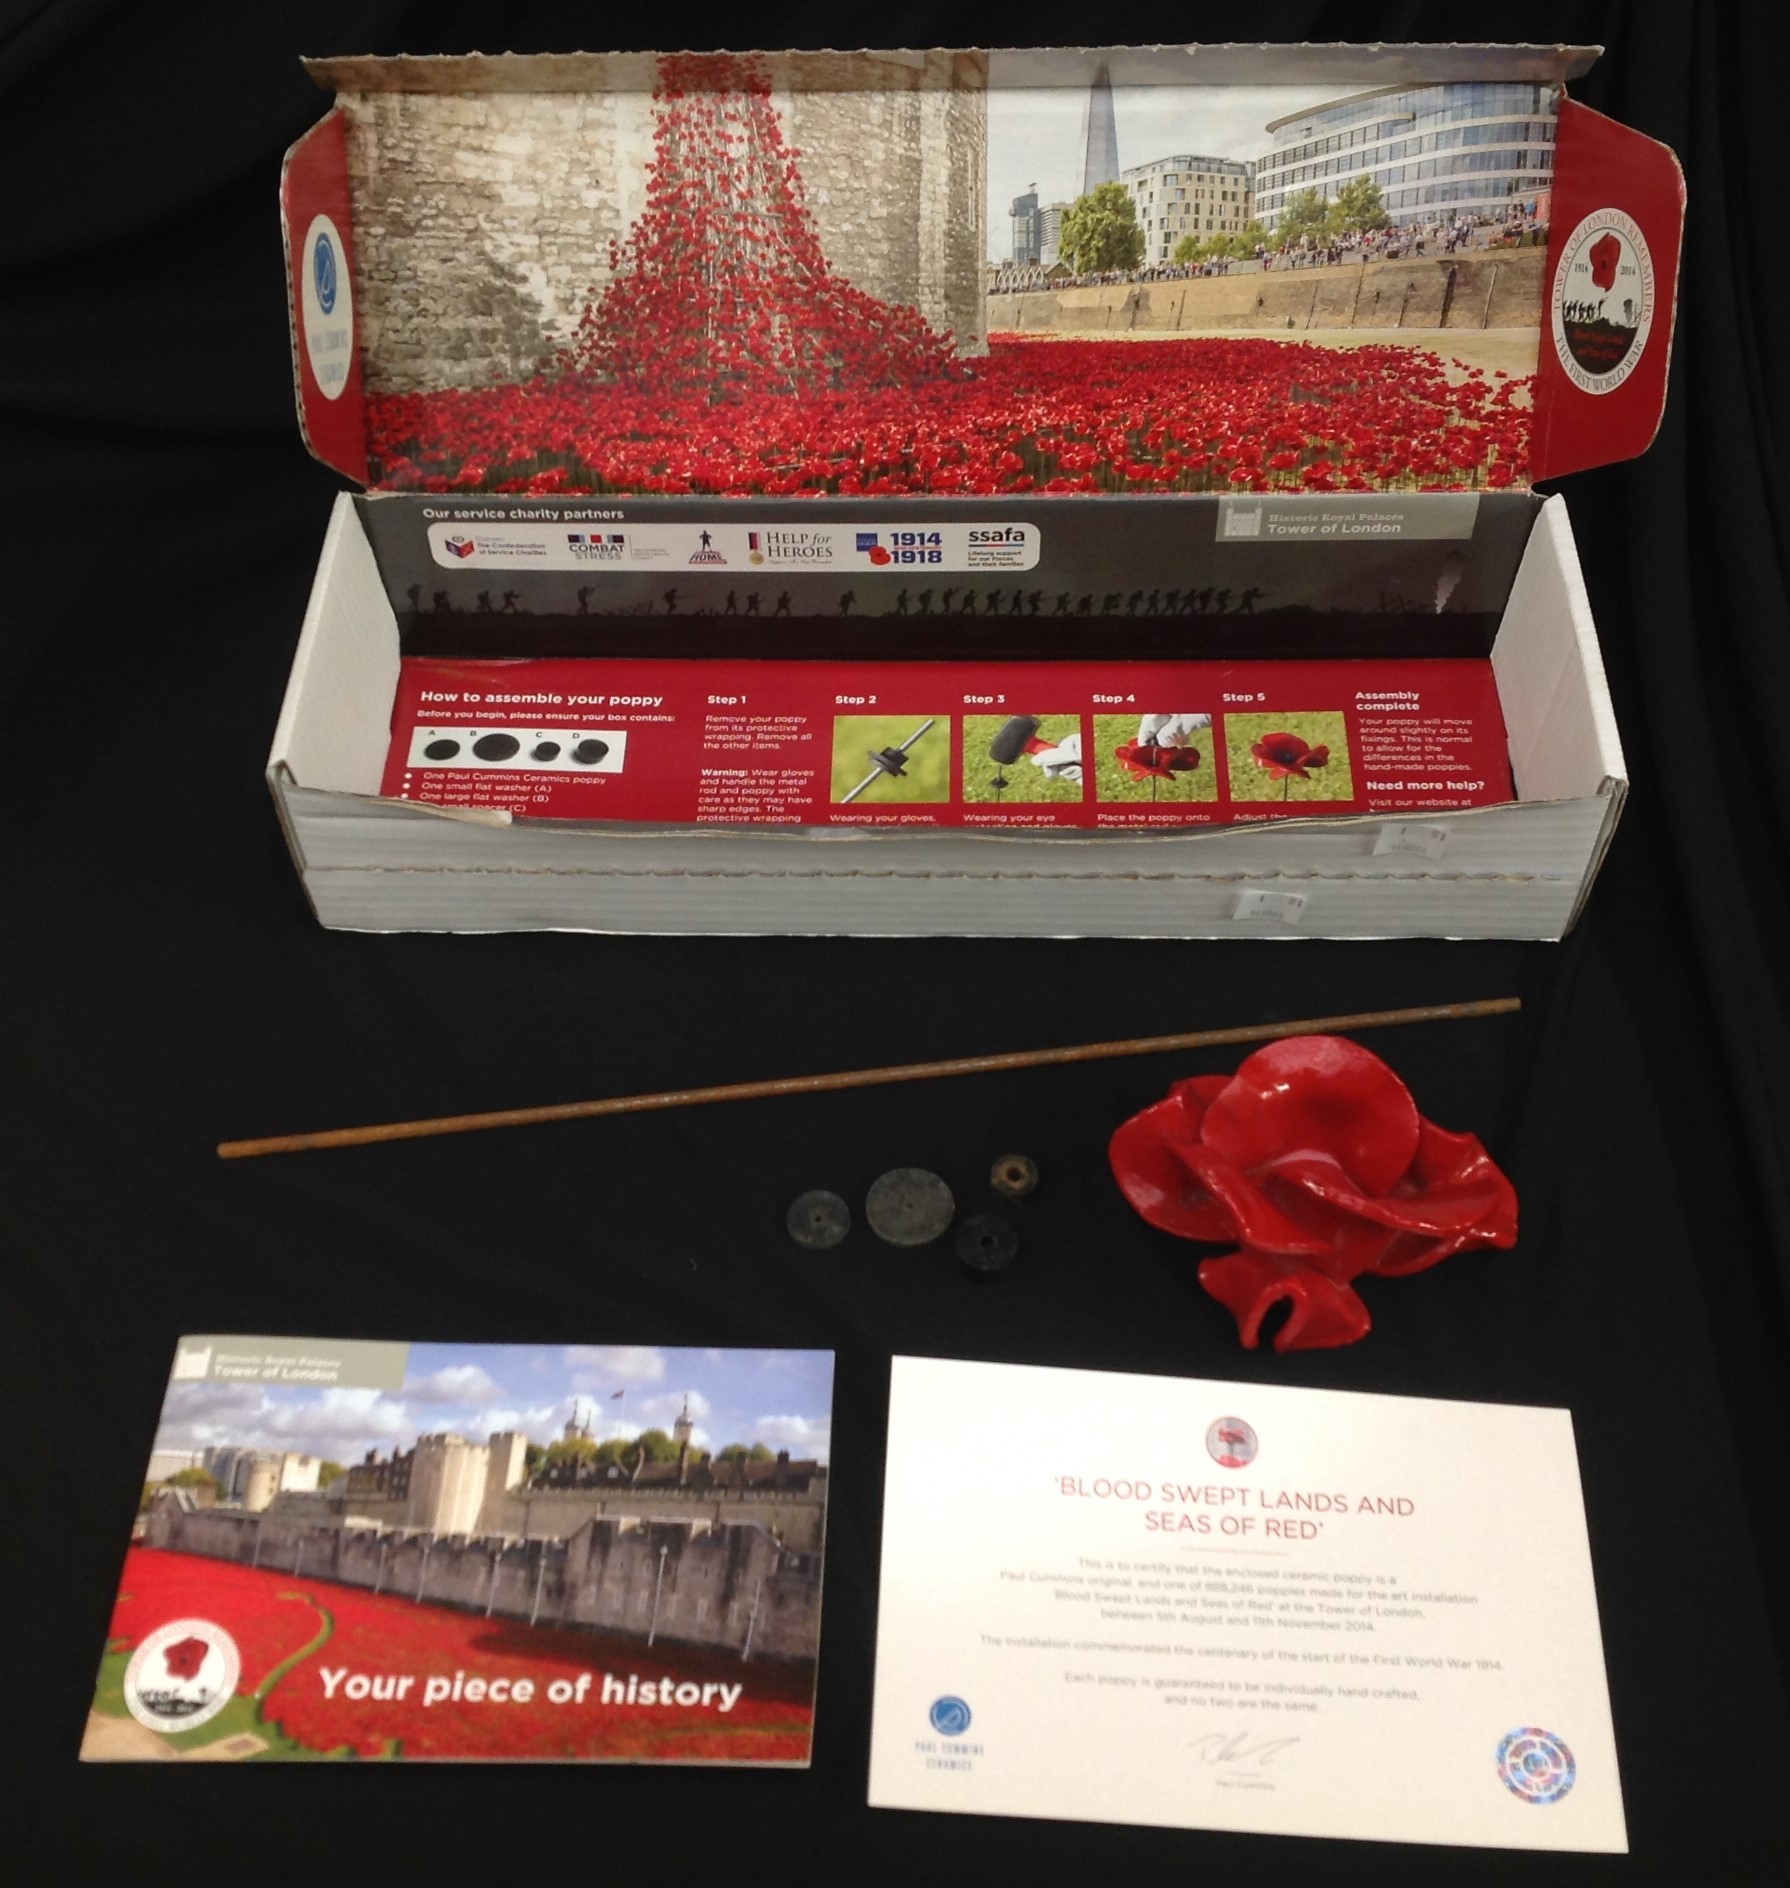 A Royal British Legion Centenary ceramic poppy by Paul Cummins made for the art installation at